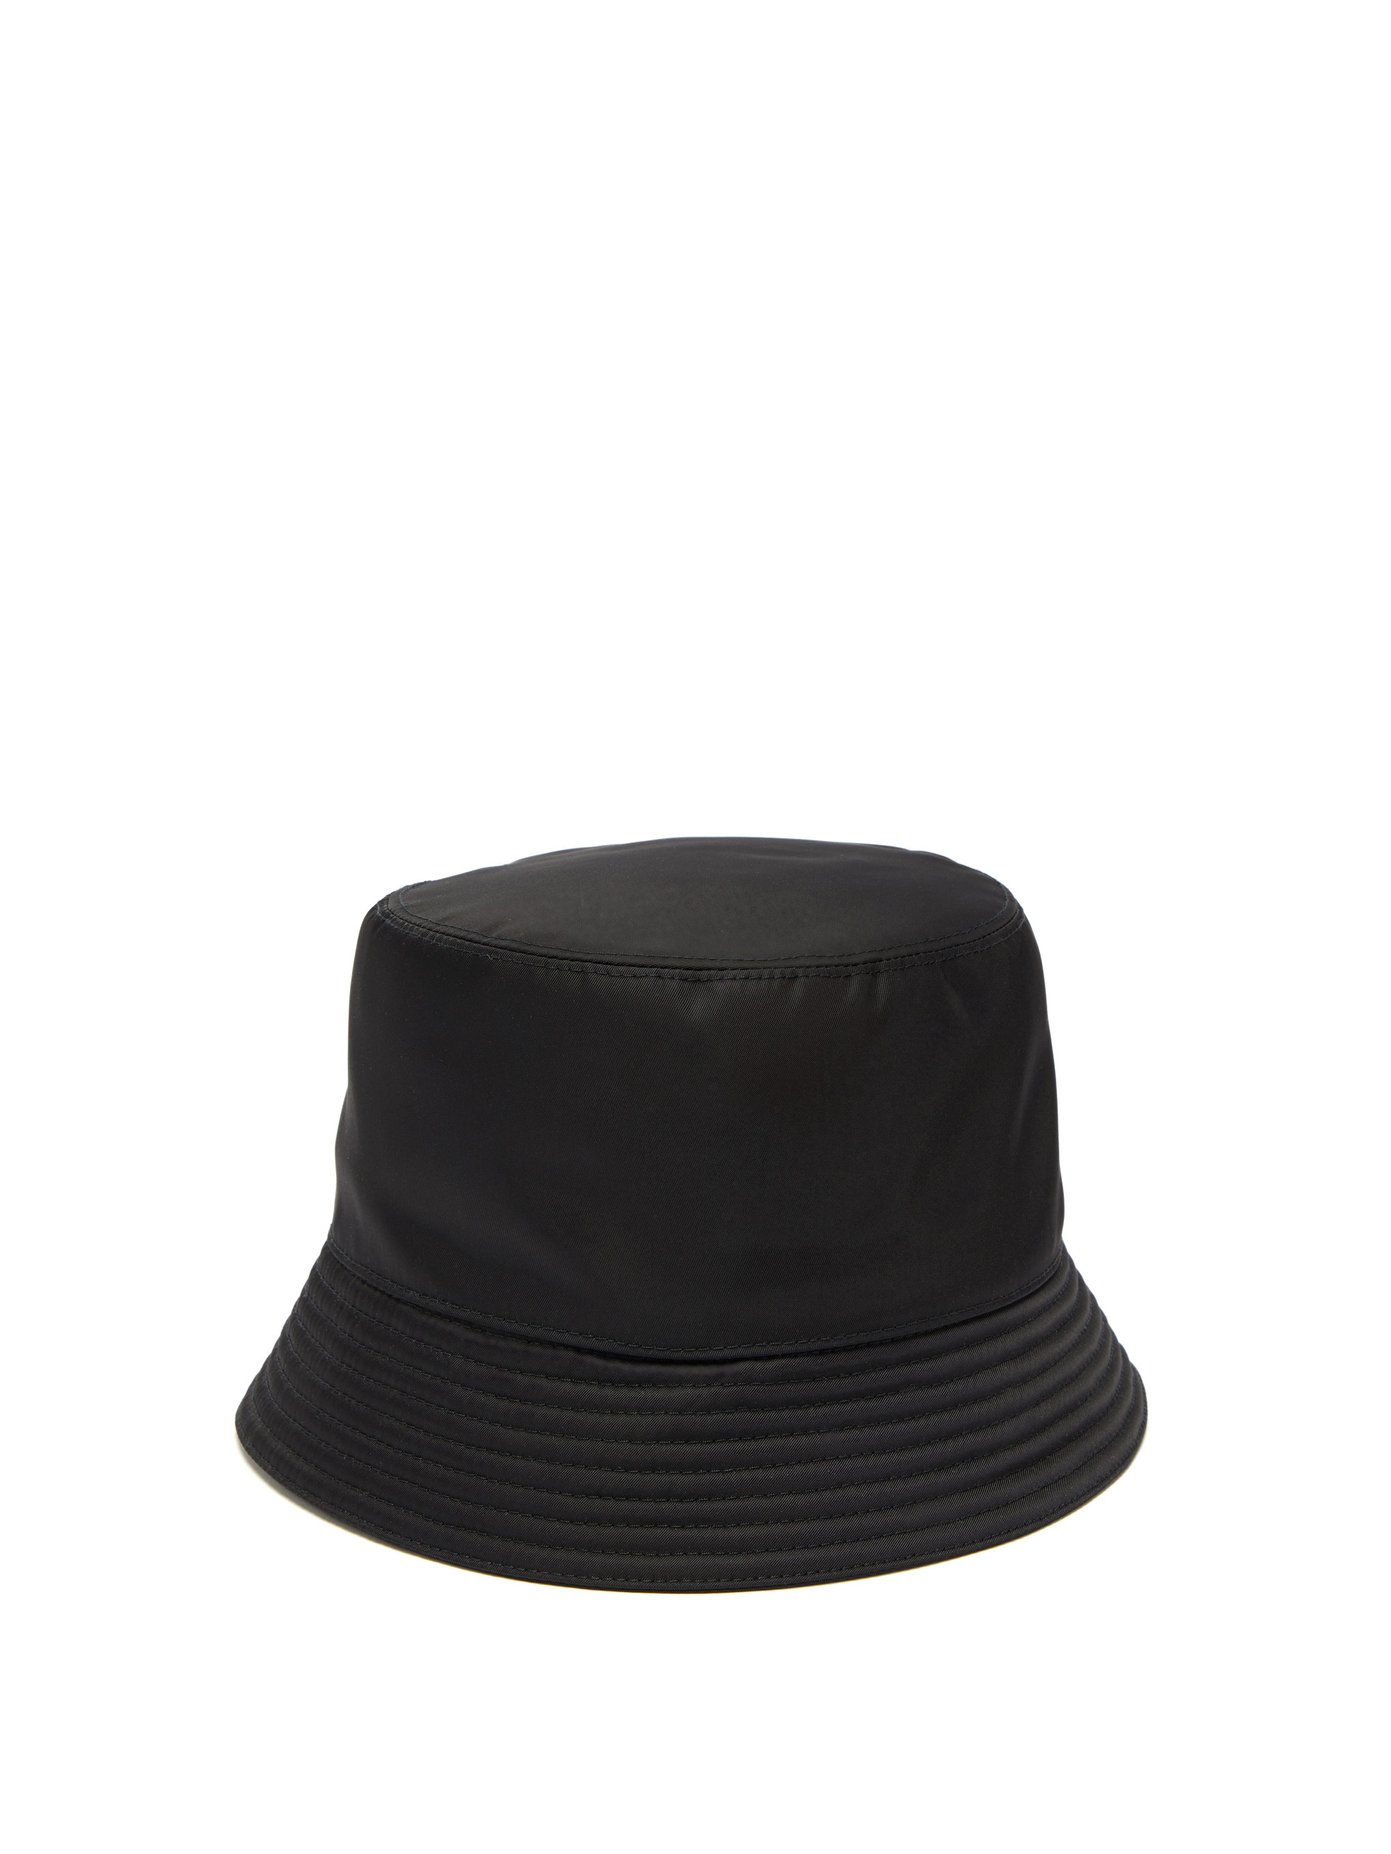 Polo Bucket Hat Size Chart